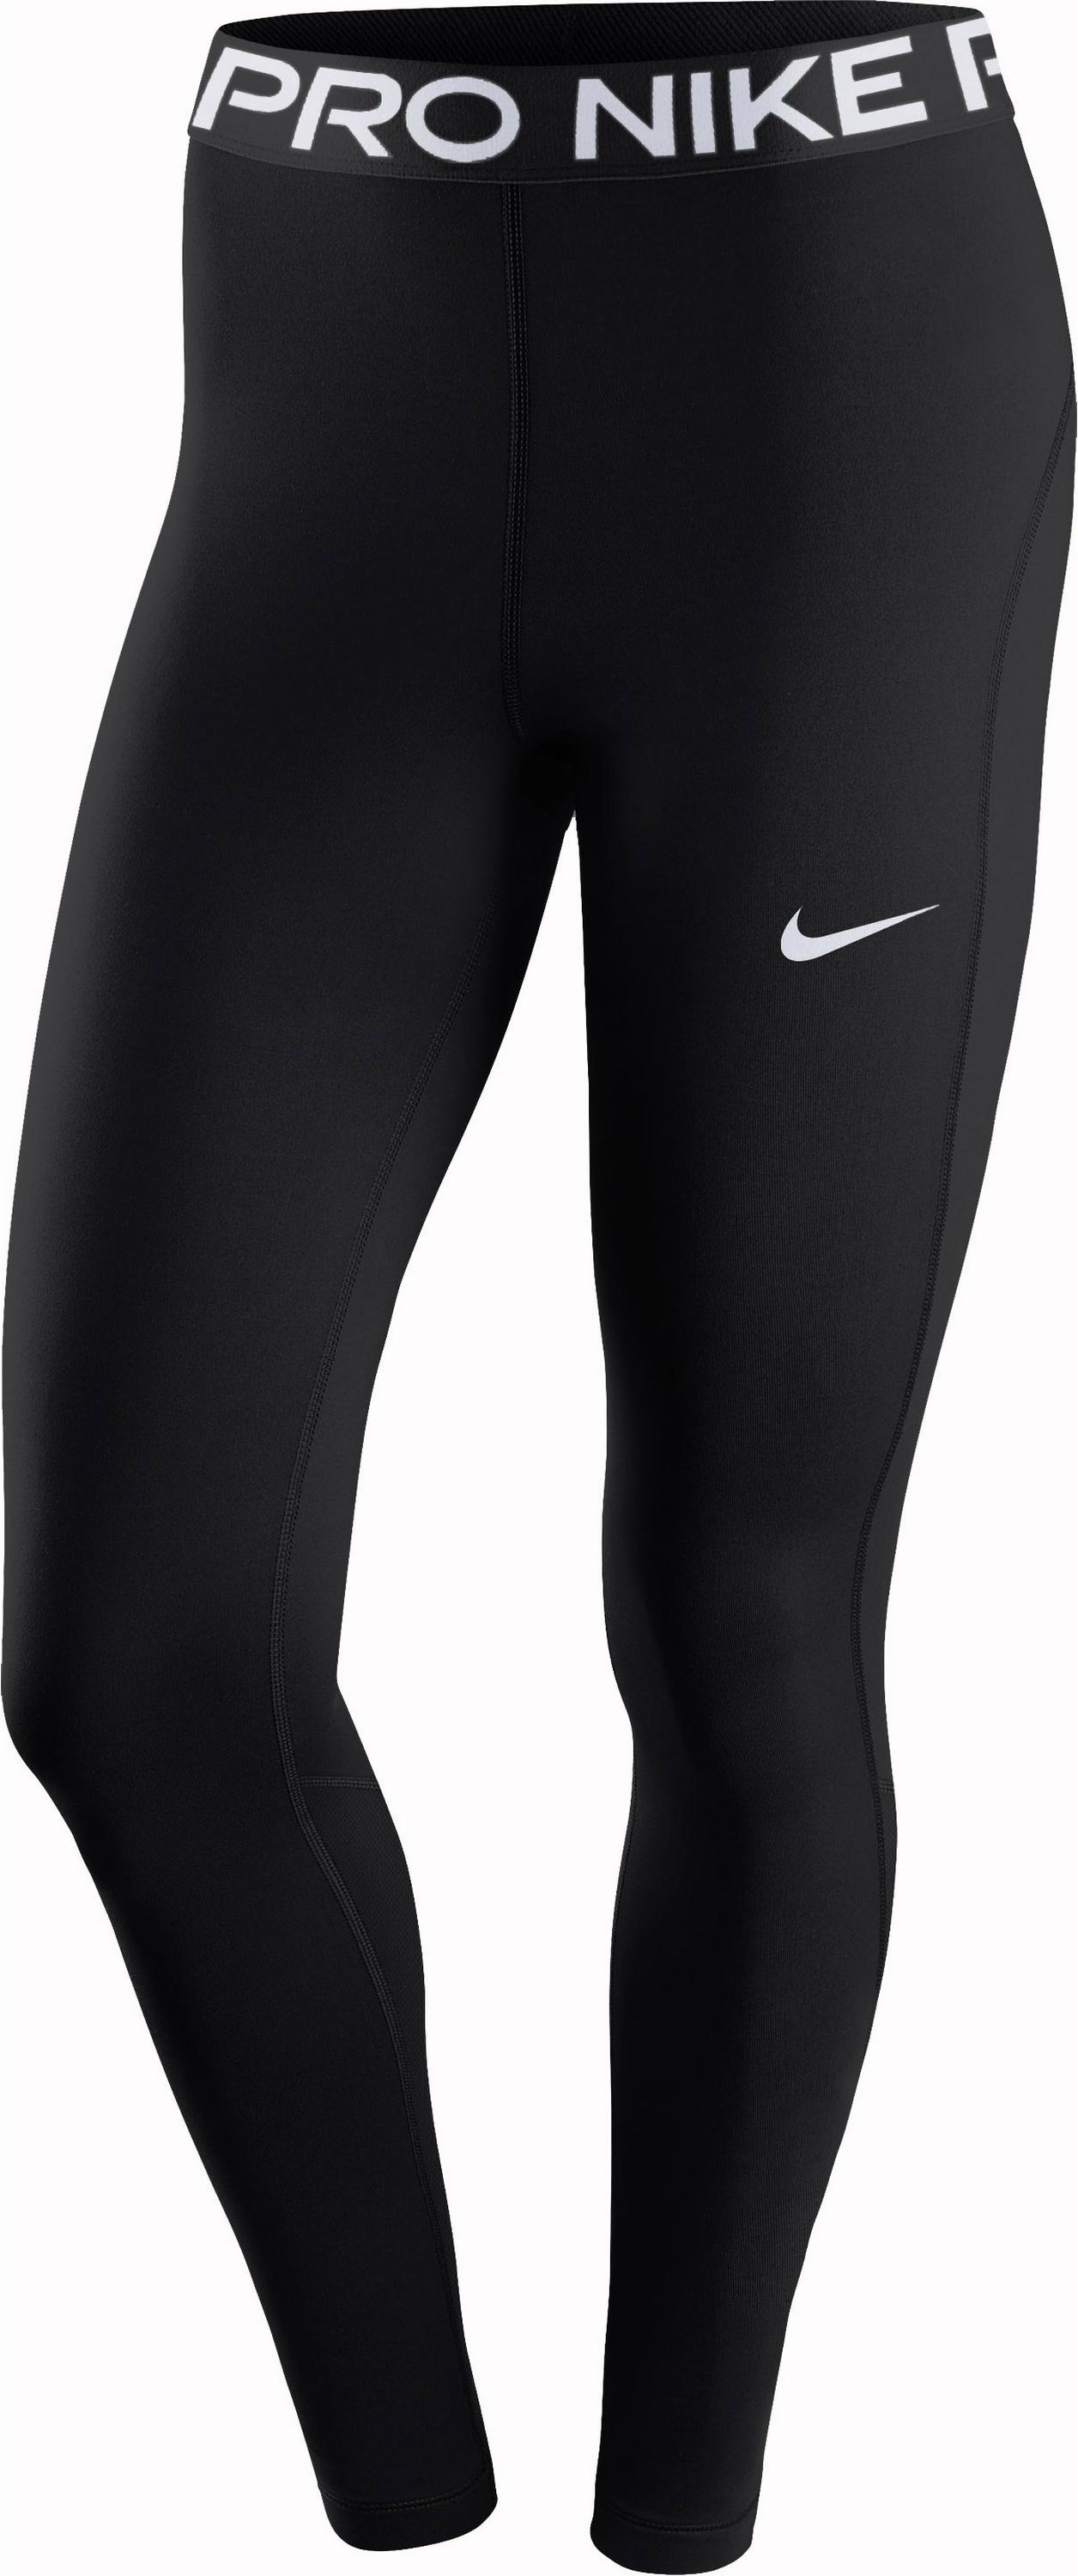 Nike PRO 365 Tights Damen in black-white, Größe S